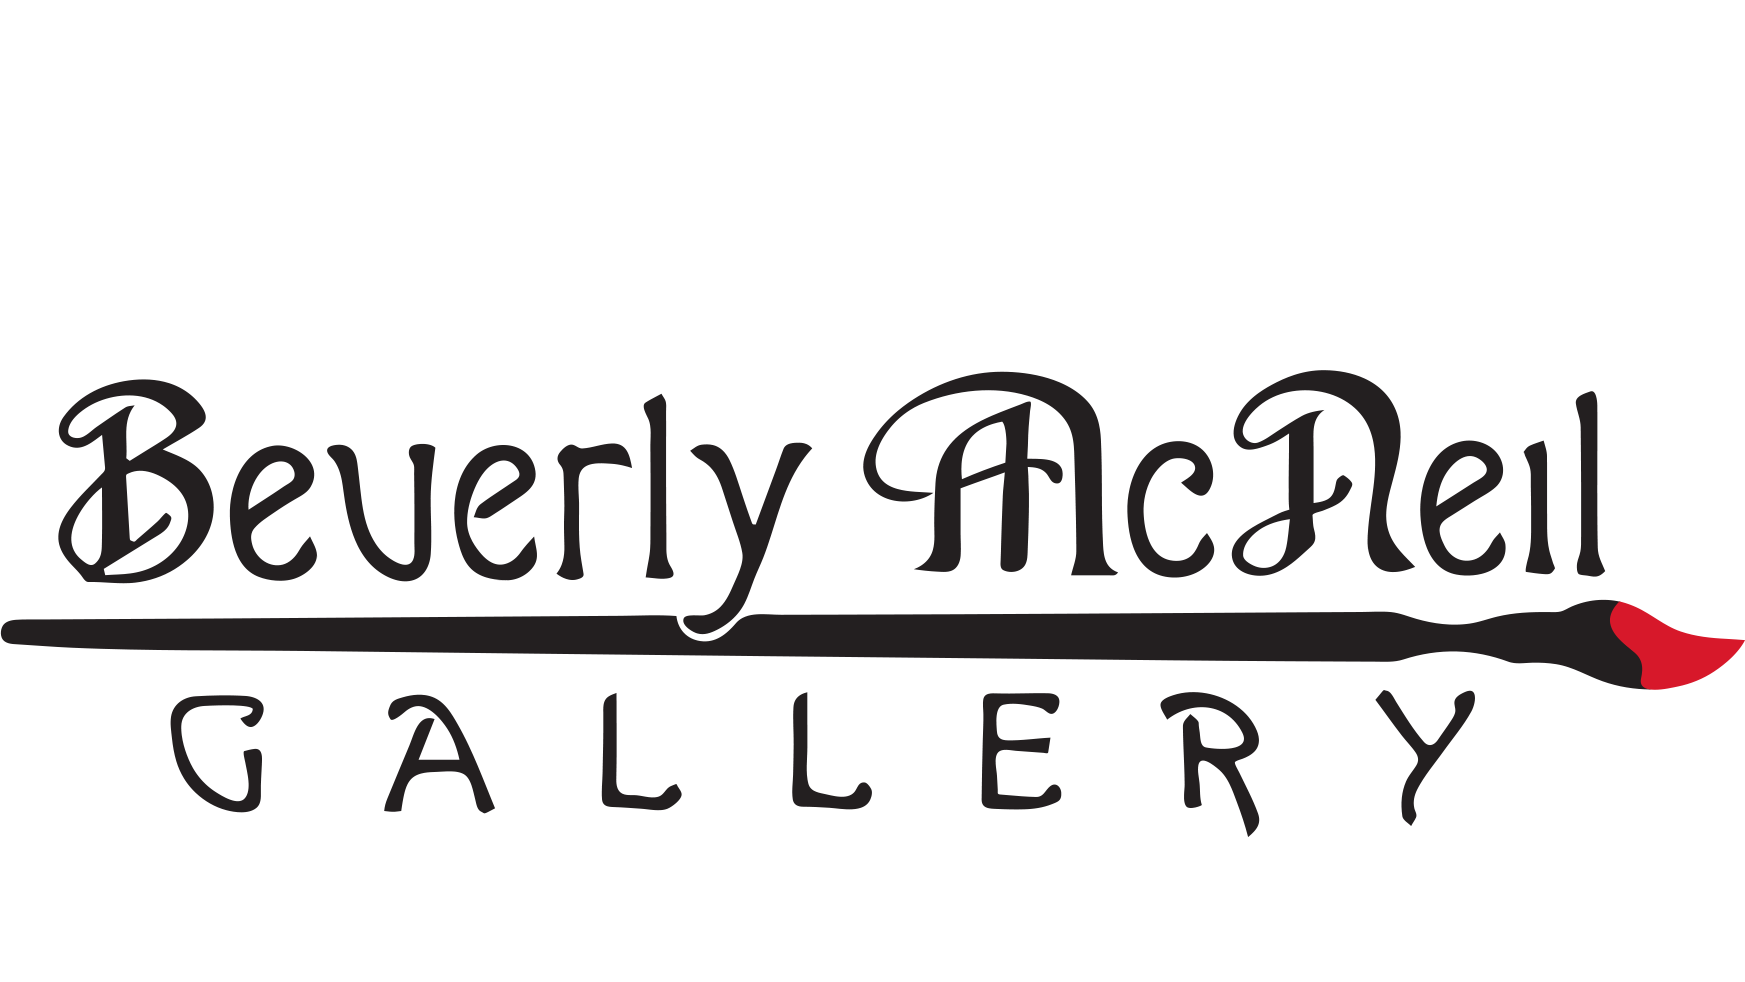 Beverly McNeil Gallery logo